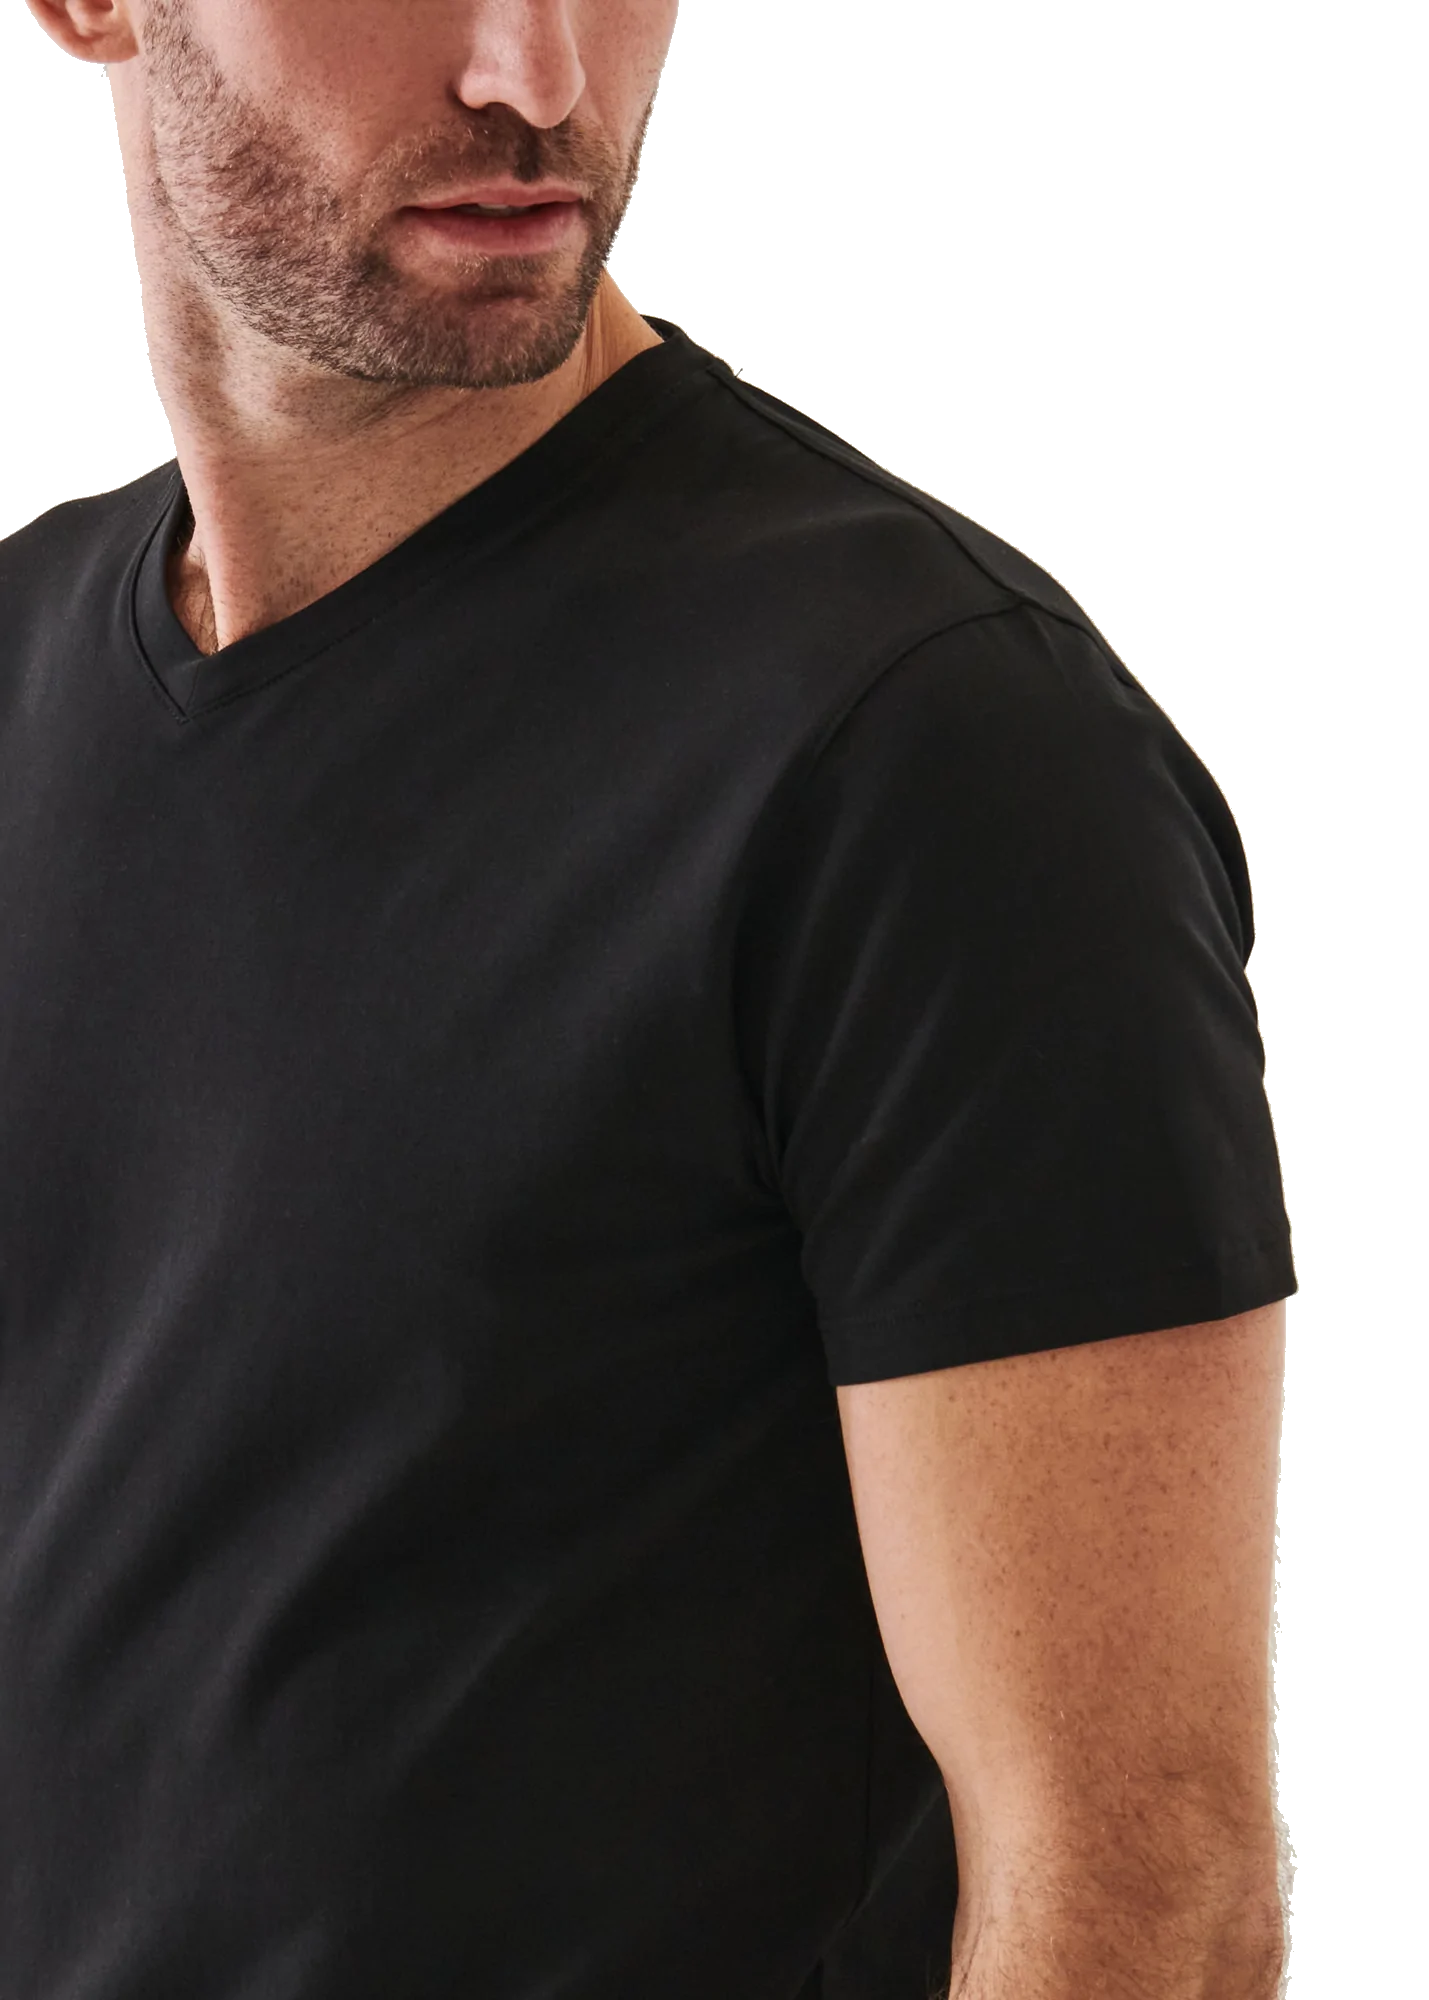 Patrick Assaraf Peruvian Pima Cotton Short Sleeve V-Neck T-Shirt